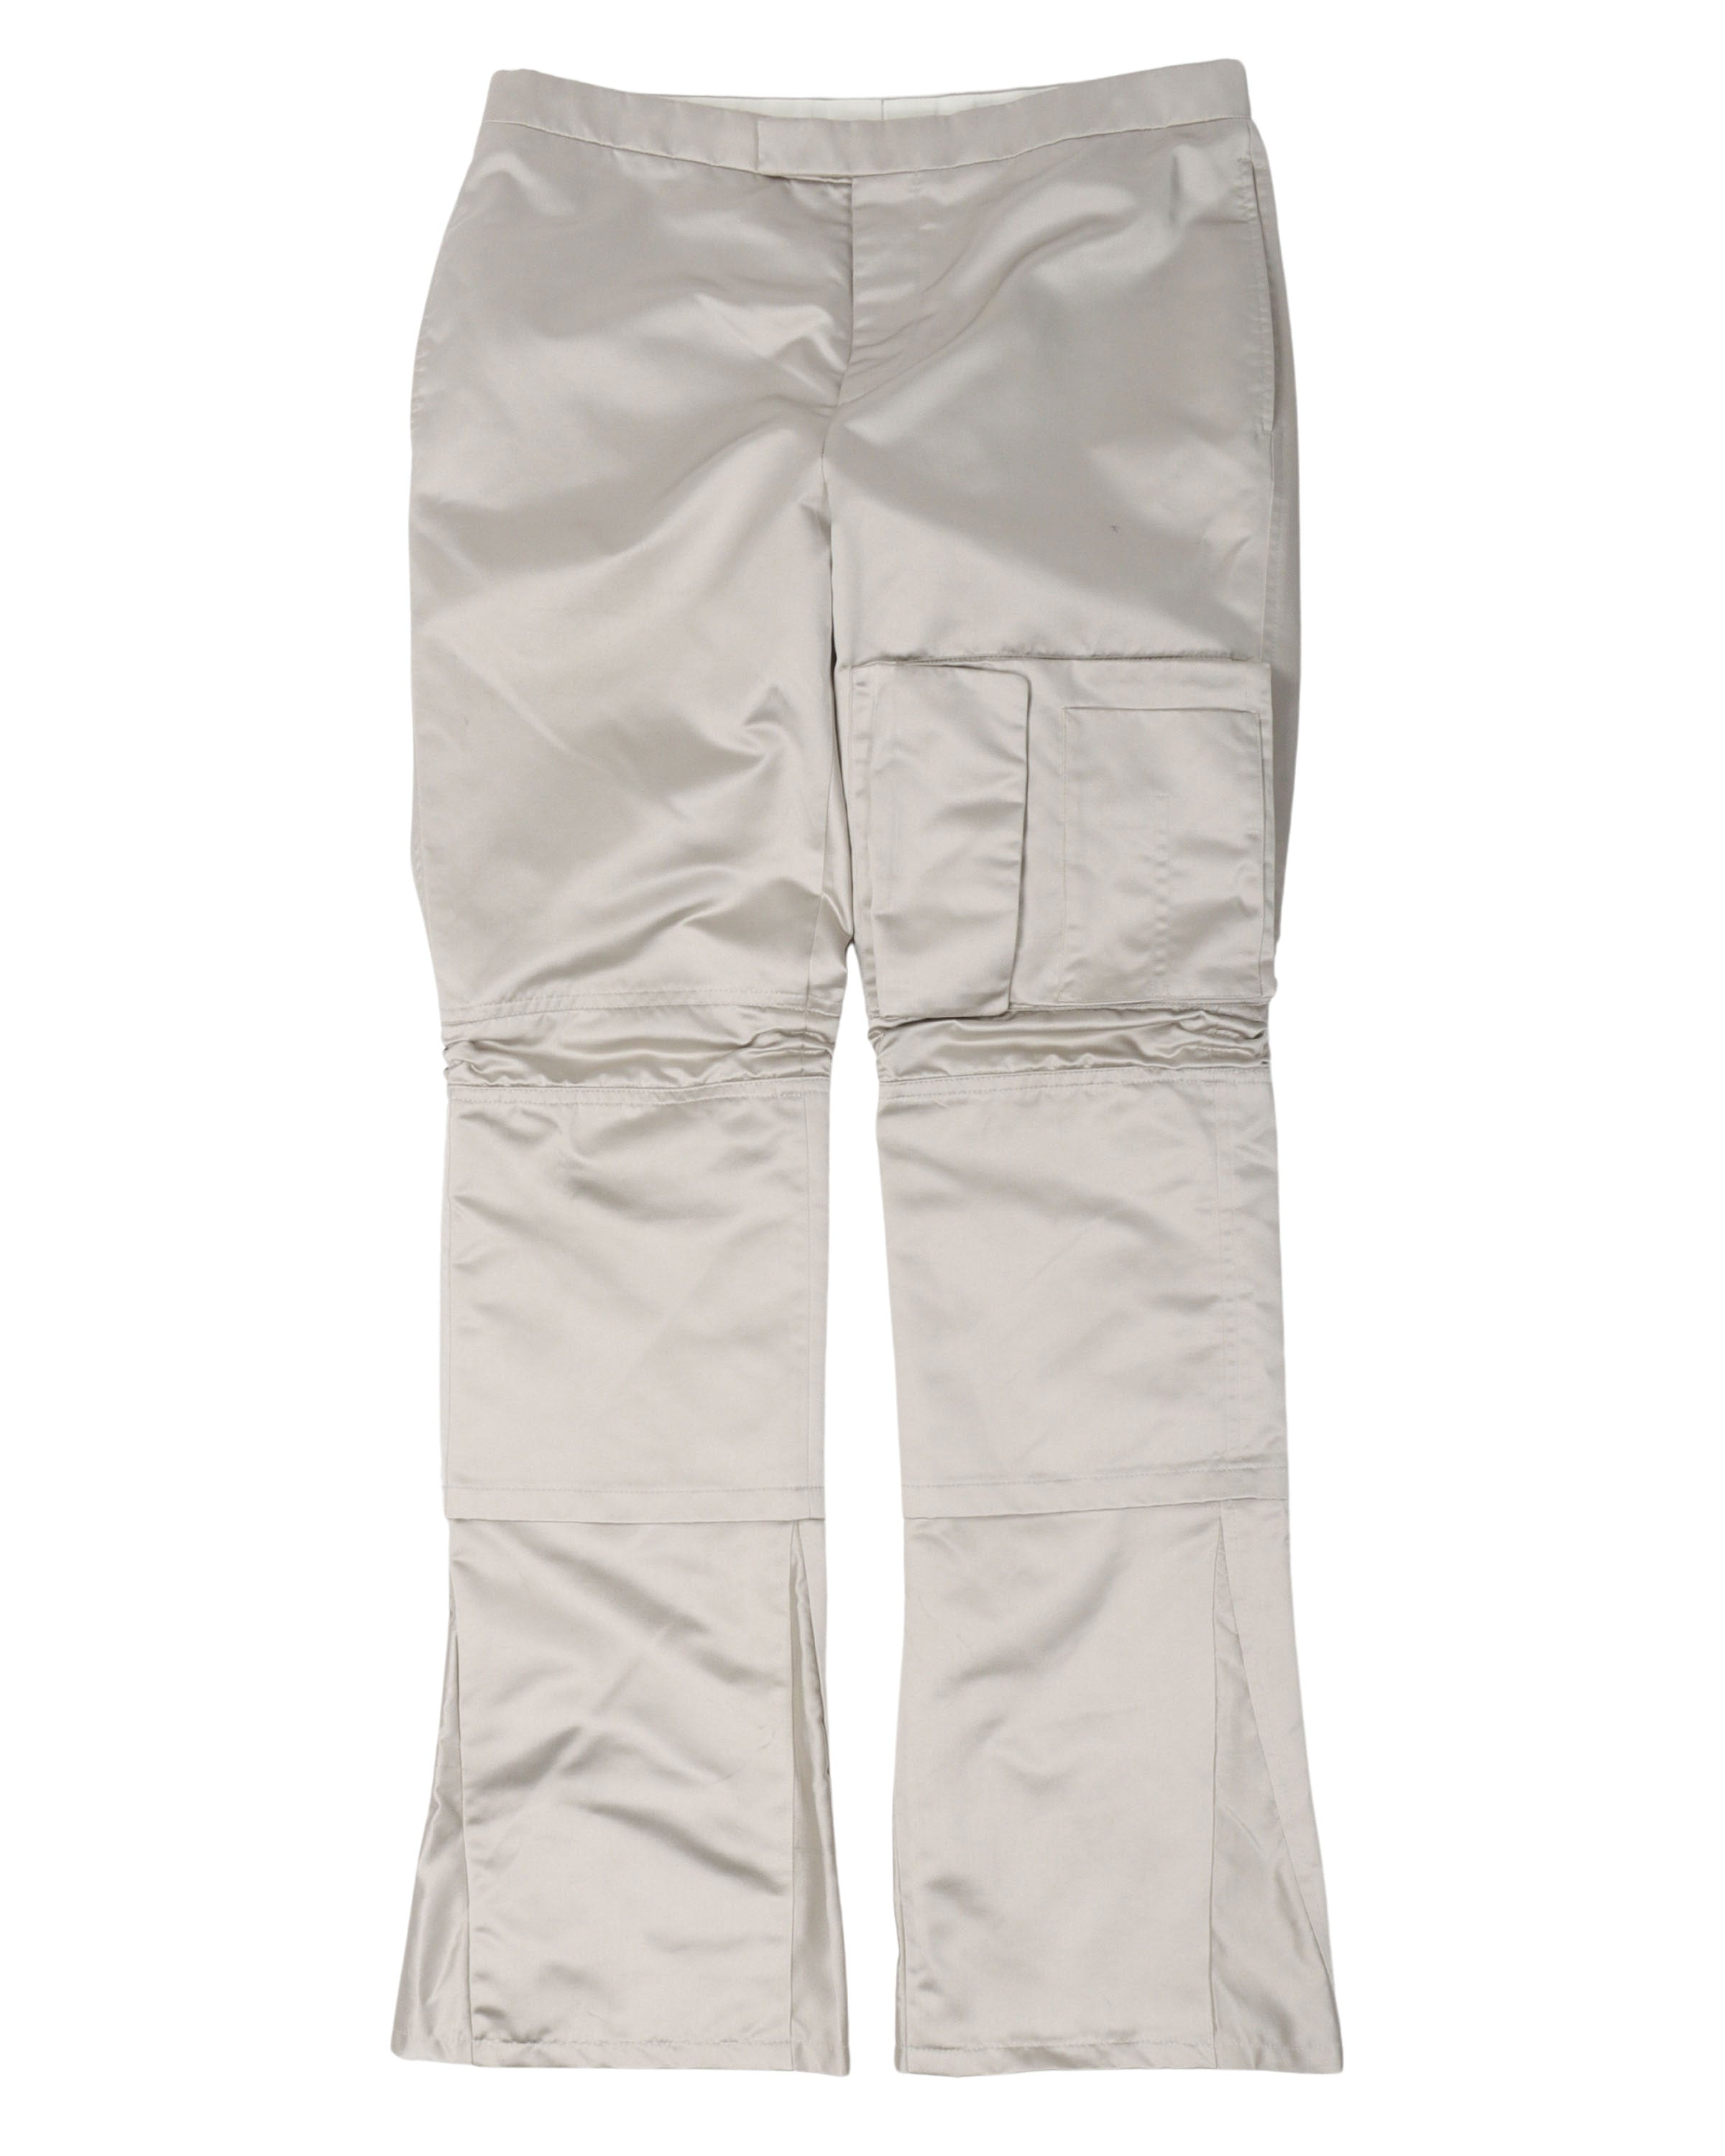 AW18 Slim Space Pants